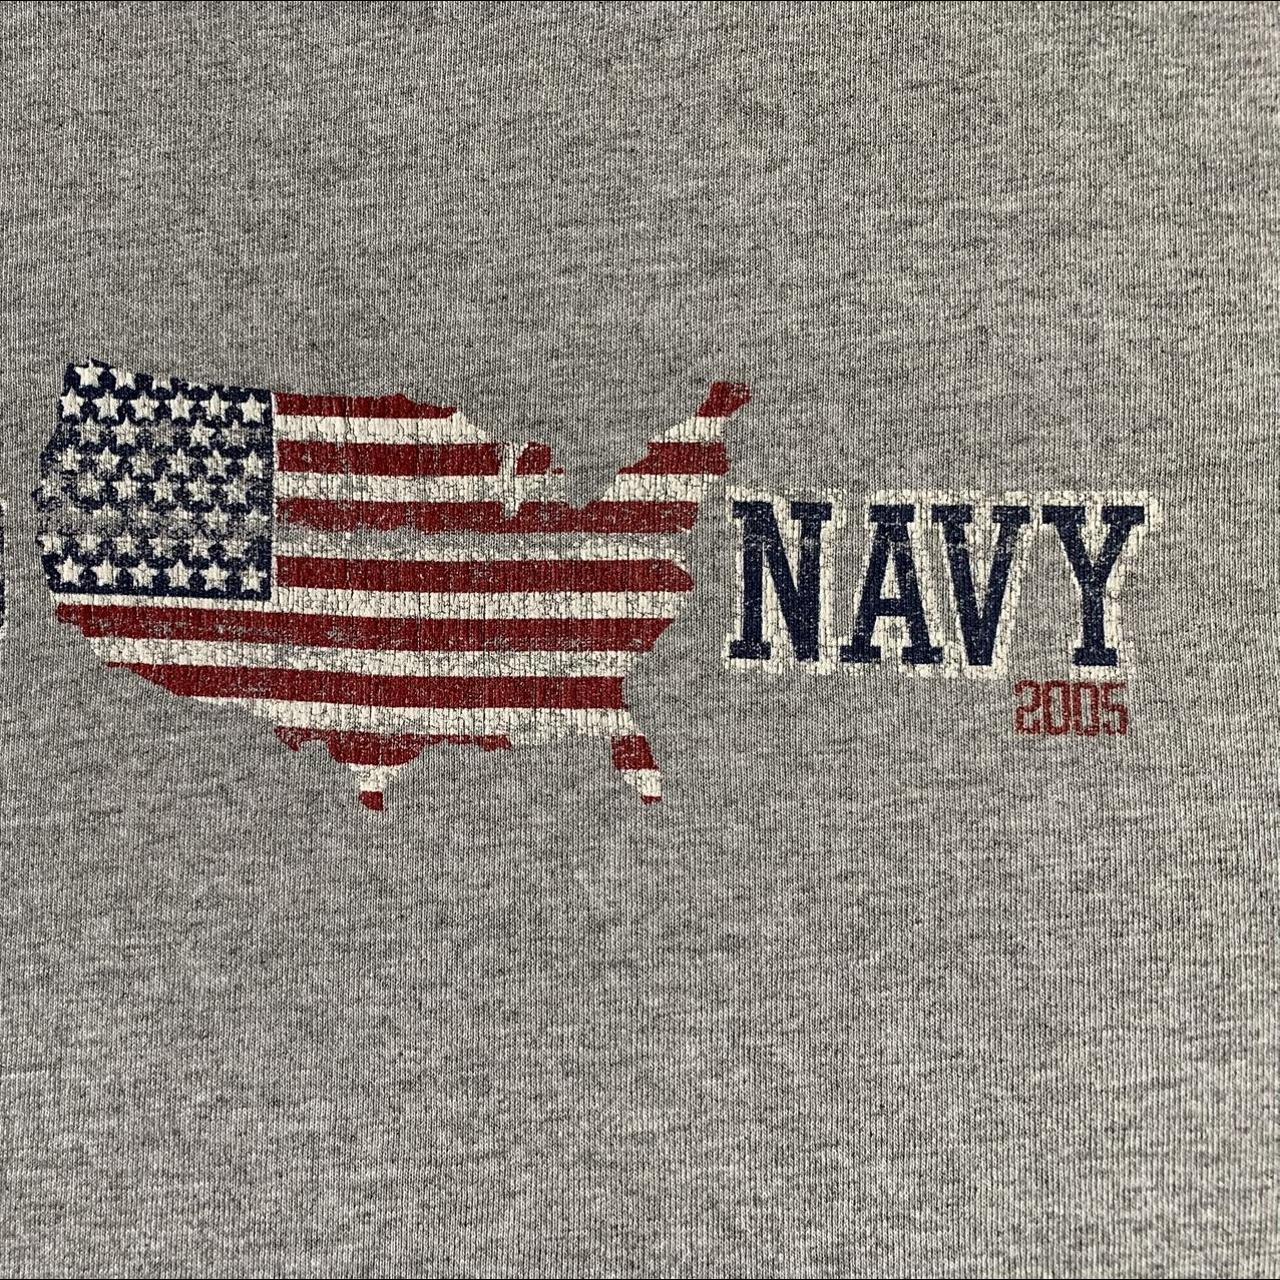 Old Navy Men's T-Shirt - Grey - XL